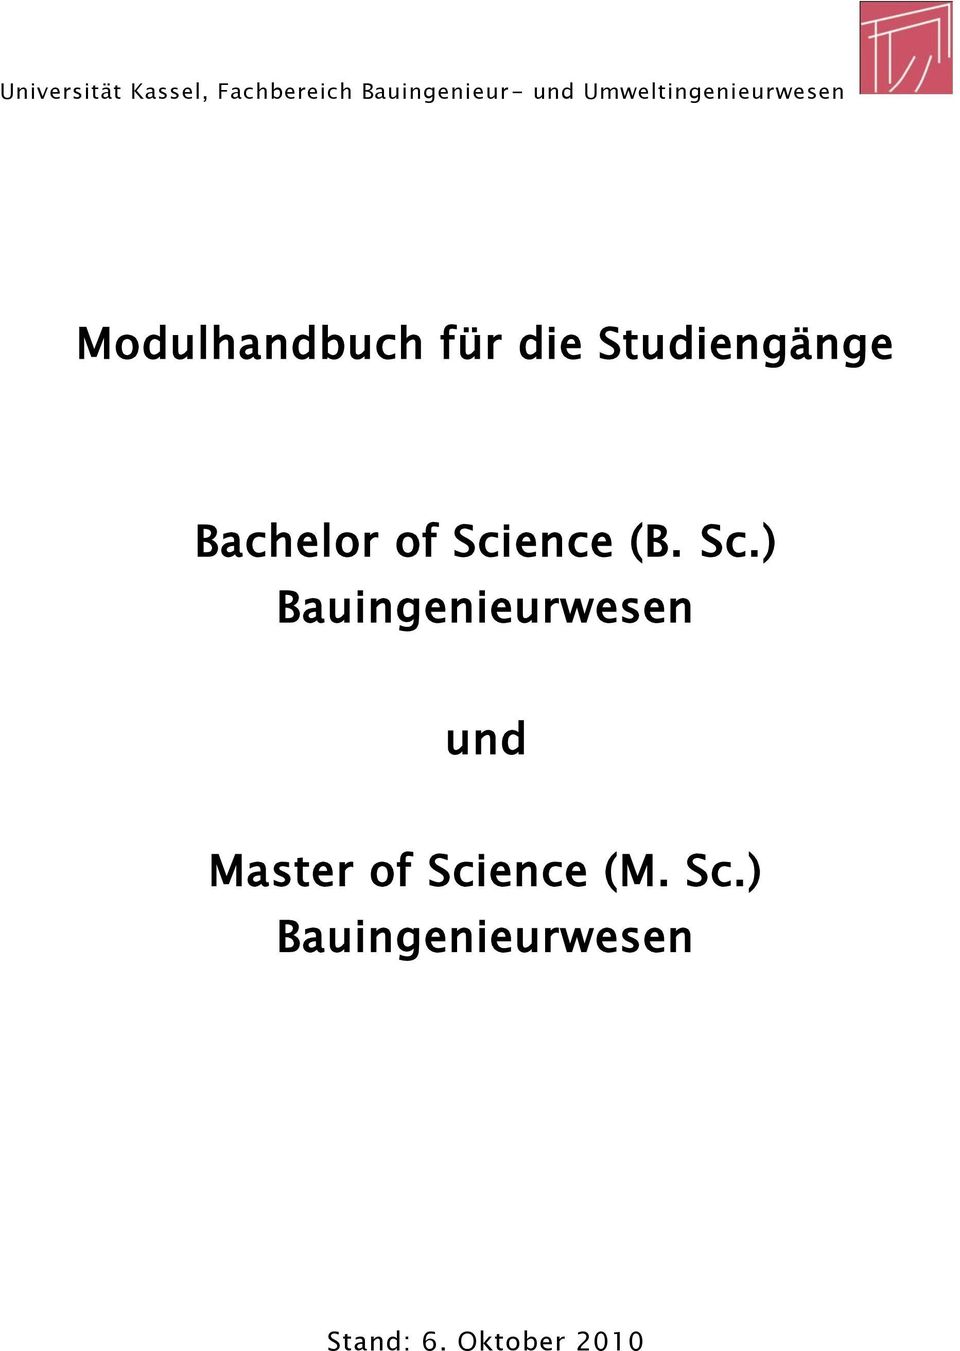 Bachelor of Sci